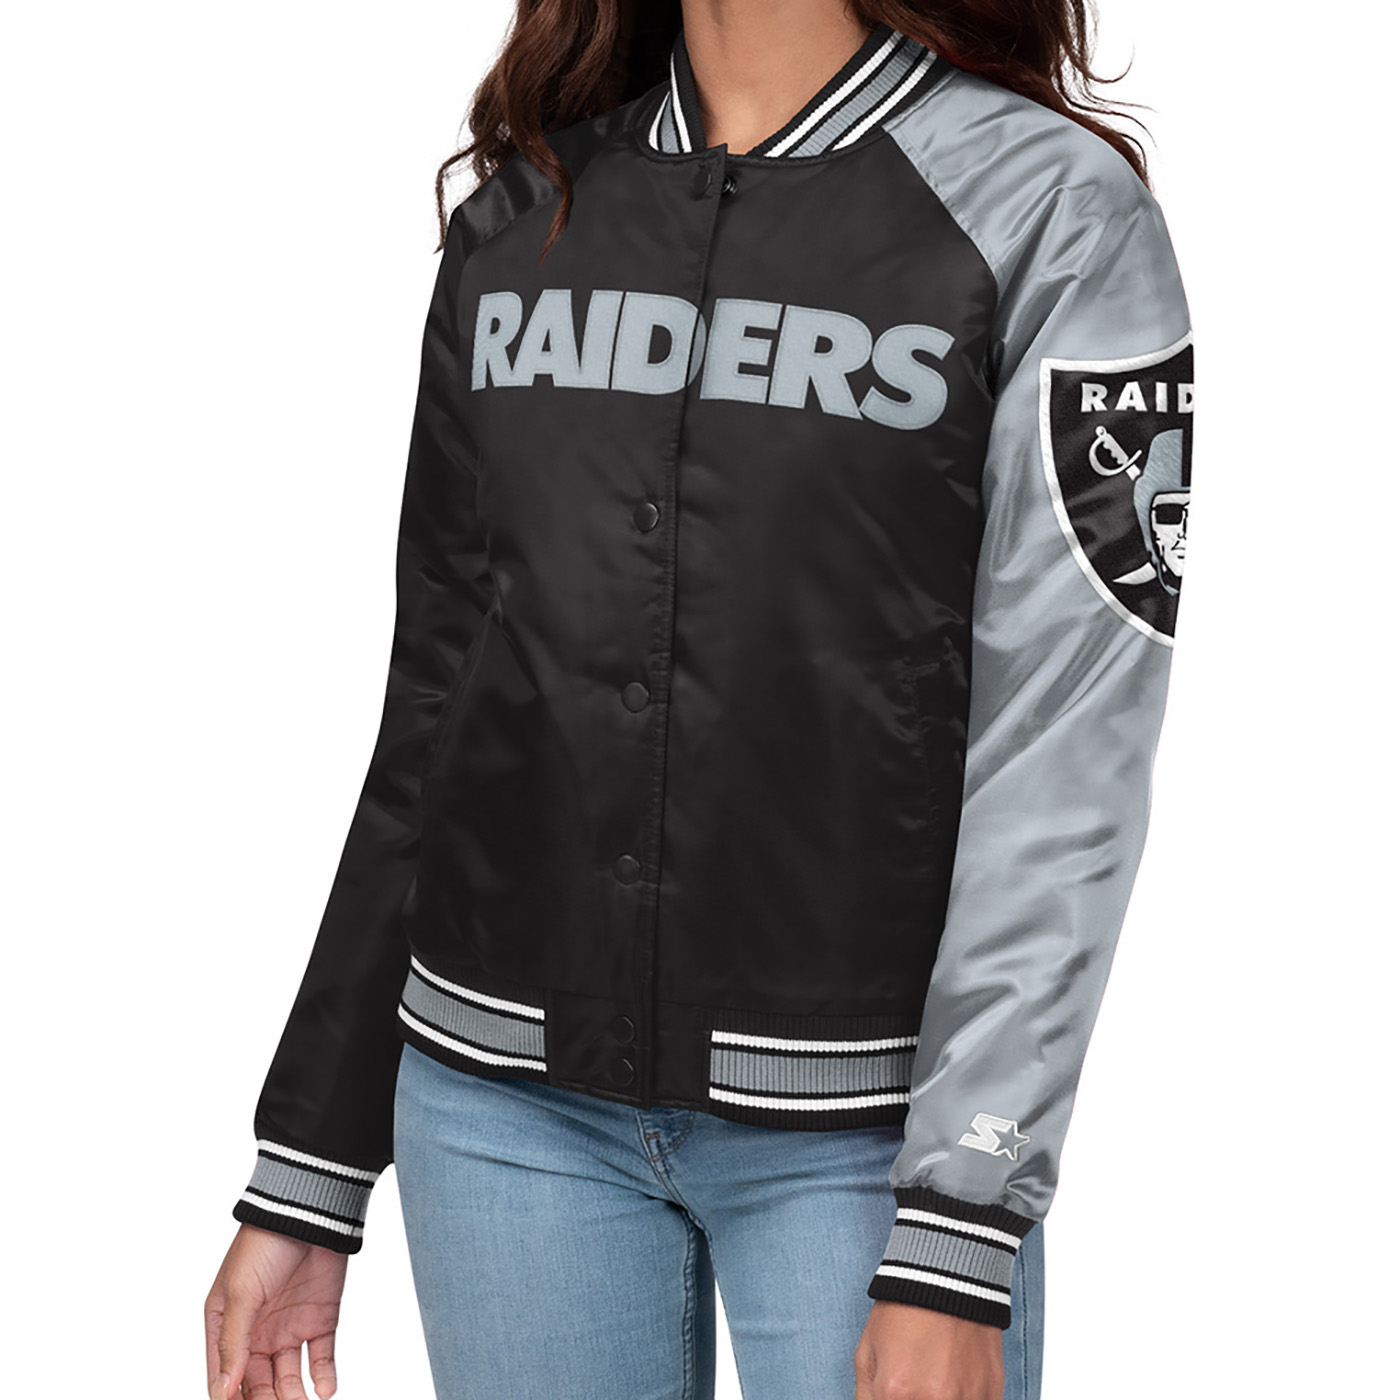 Jacket Makers Women's Raiders Las Vegas Starter Jacket